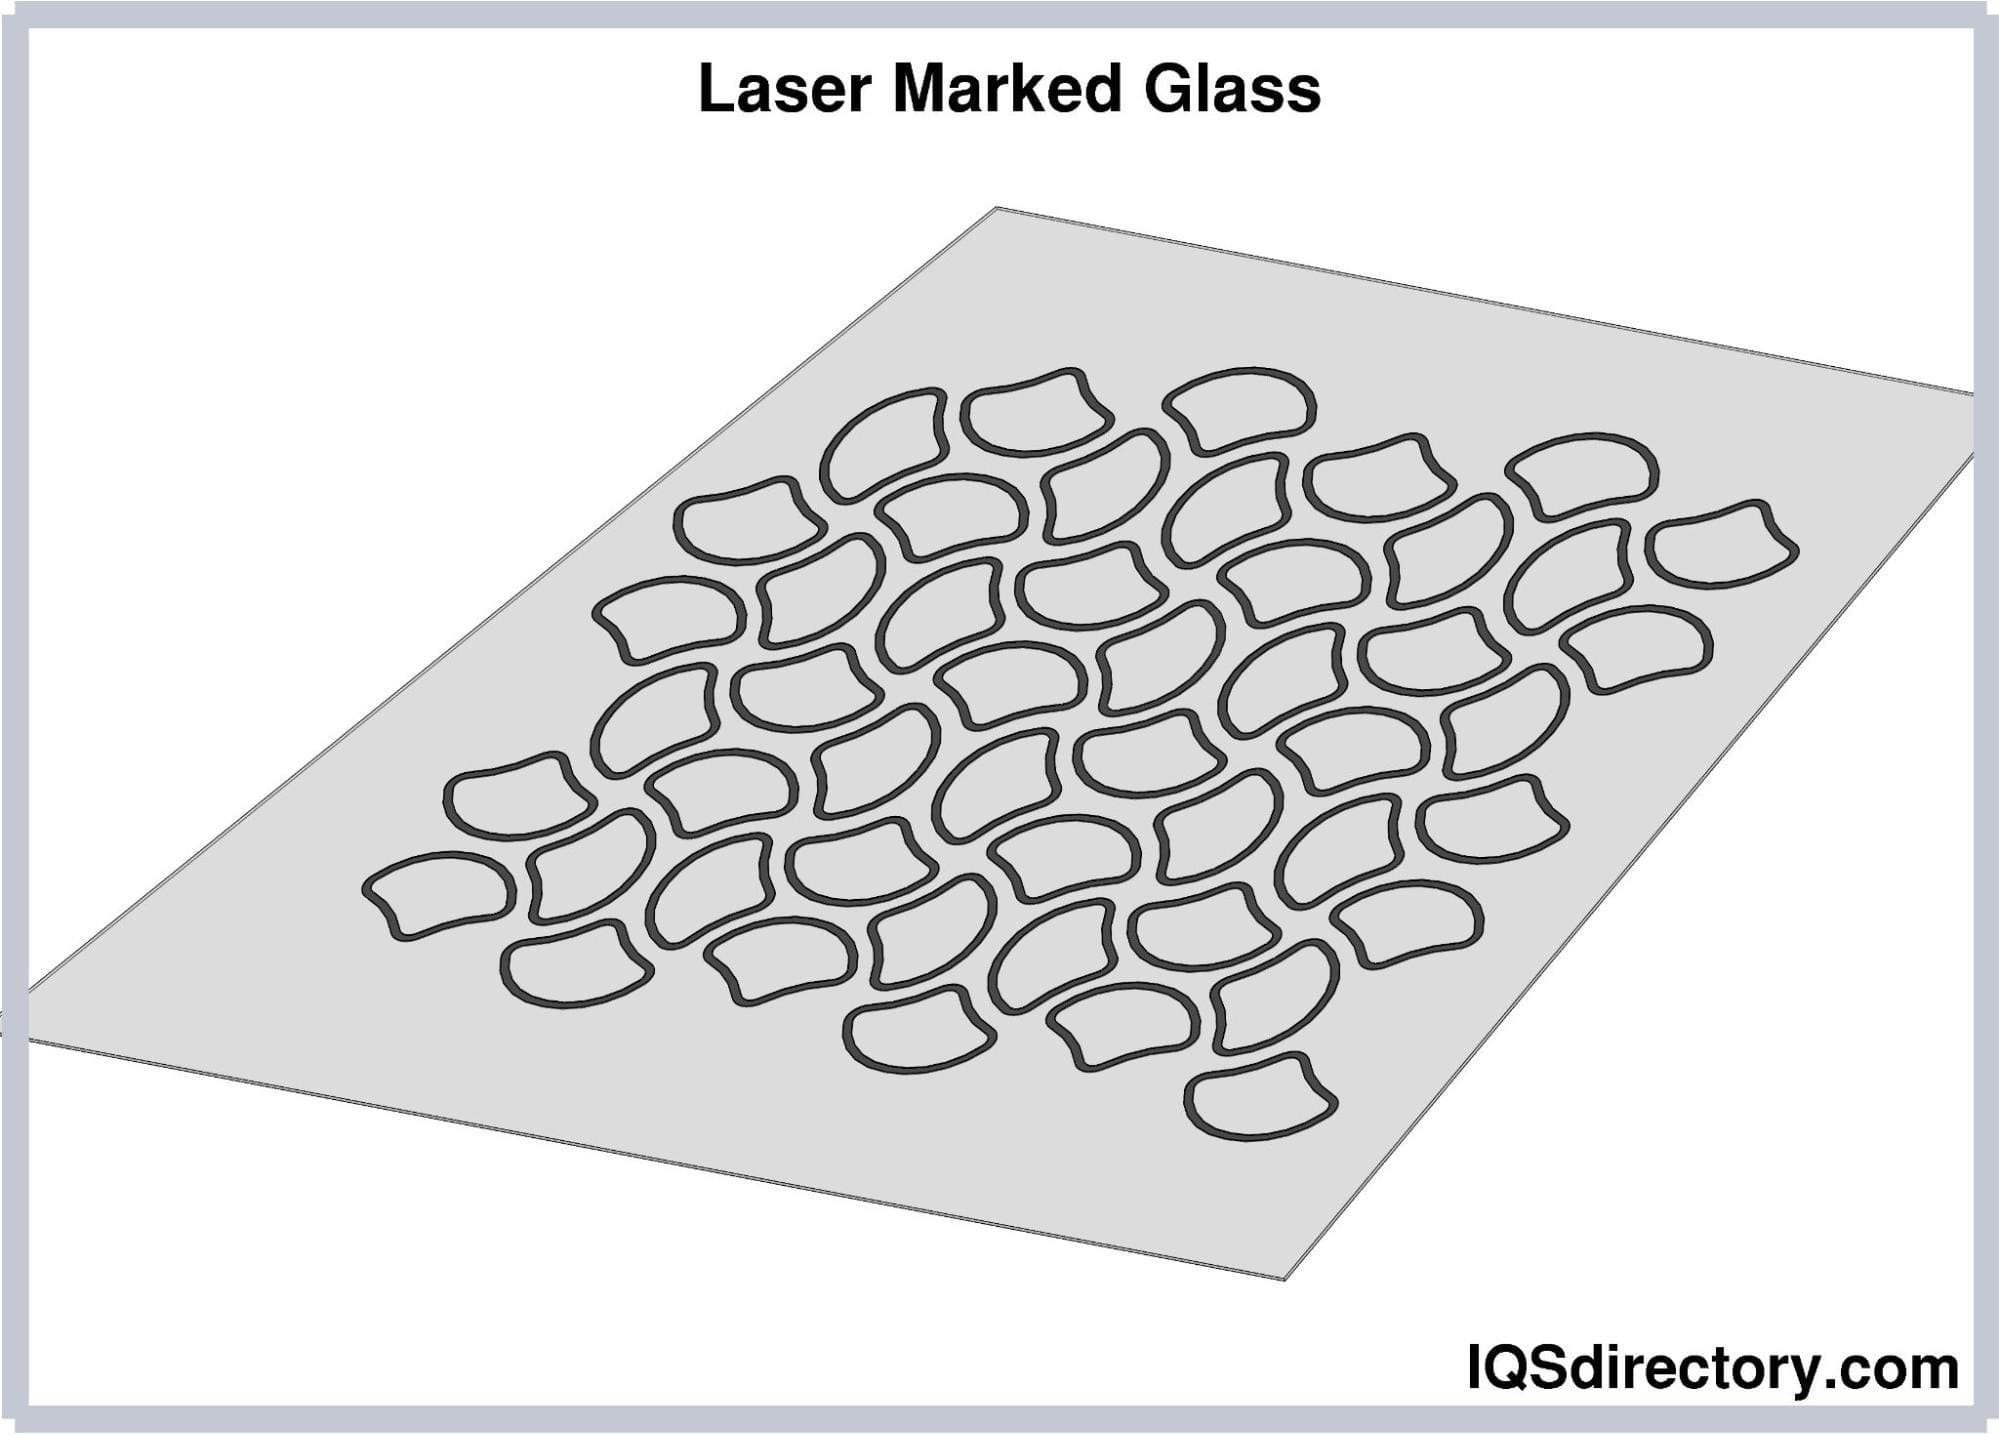 Laser Marked Glass